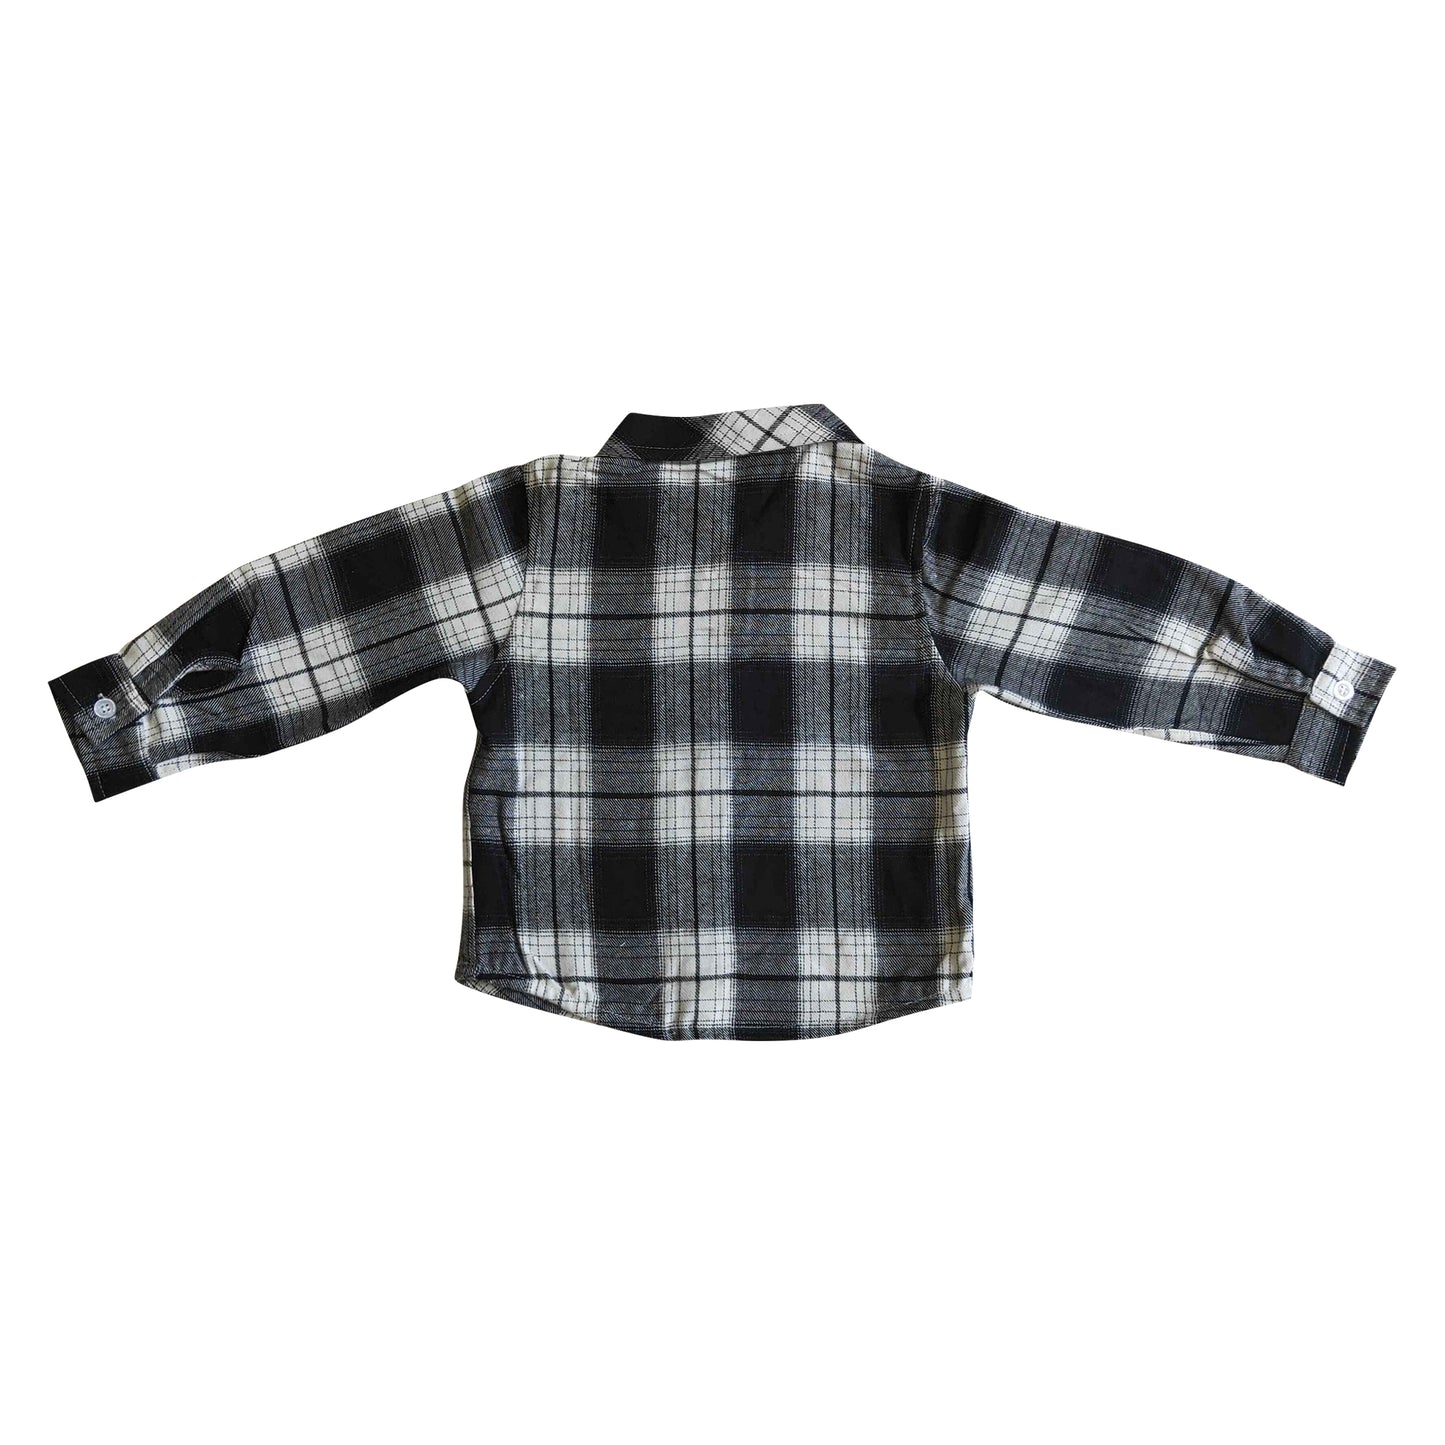 children's clothing boy flannel black white plaid button shirt for winter